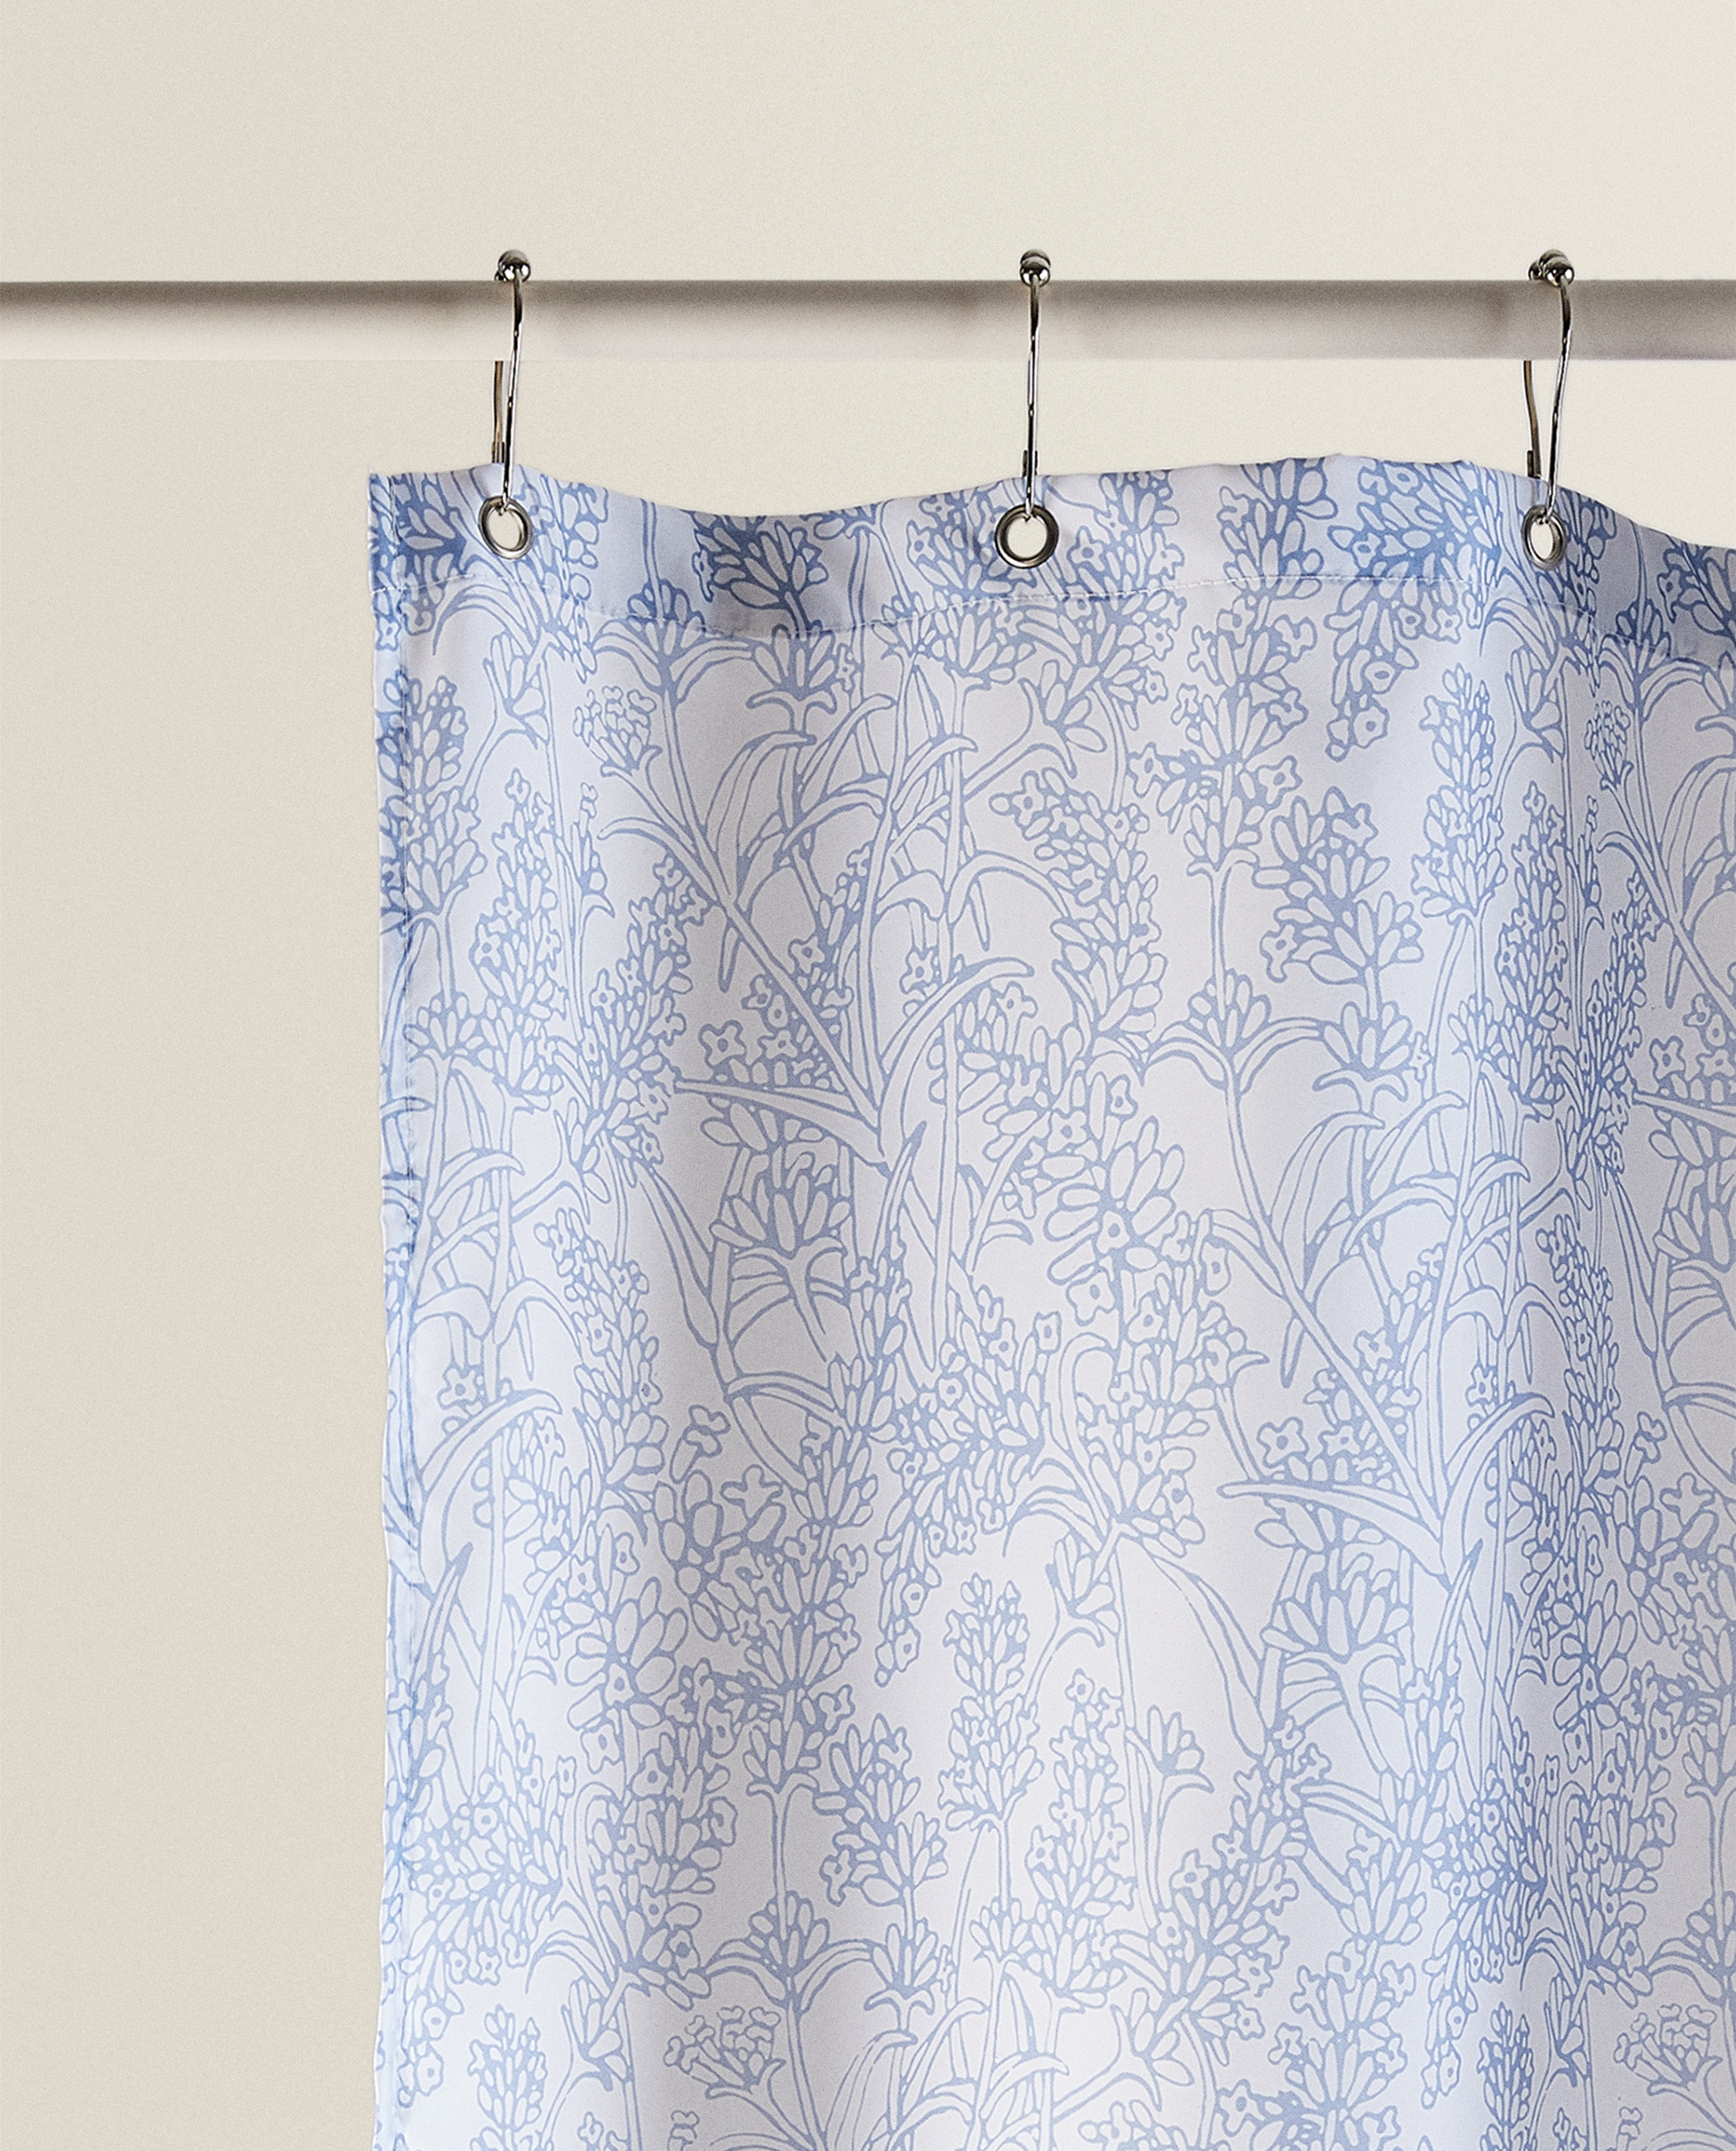 lavender shower curtain